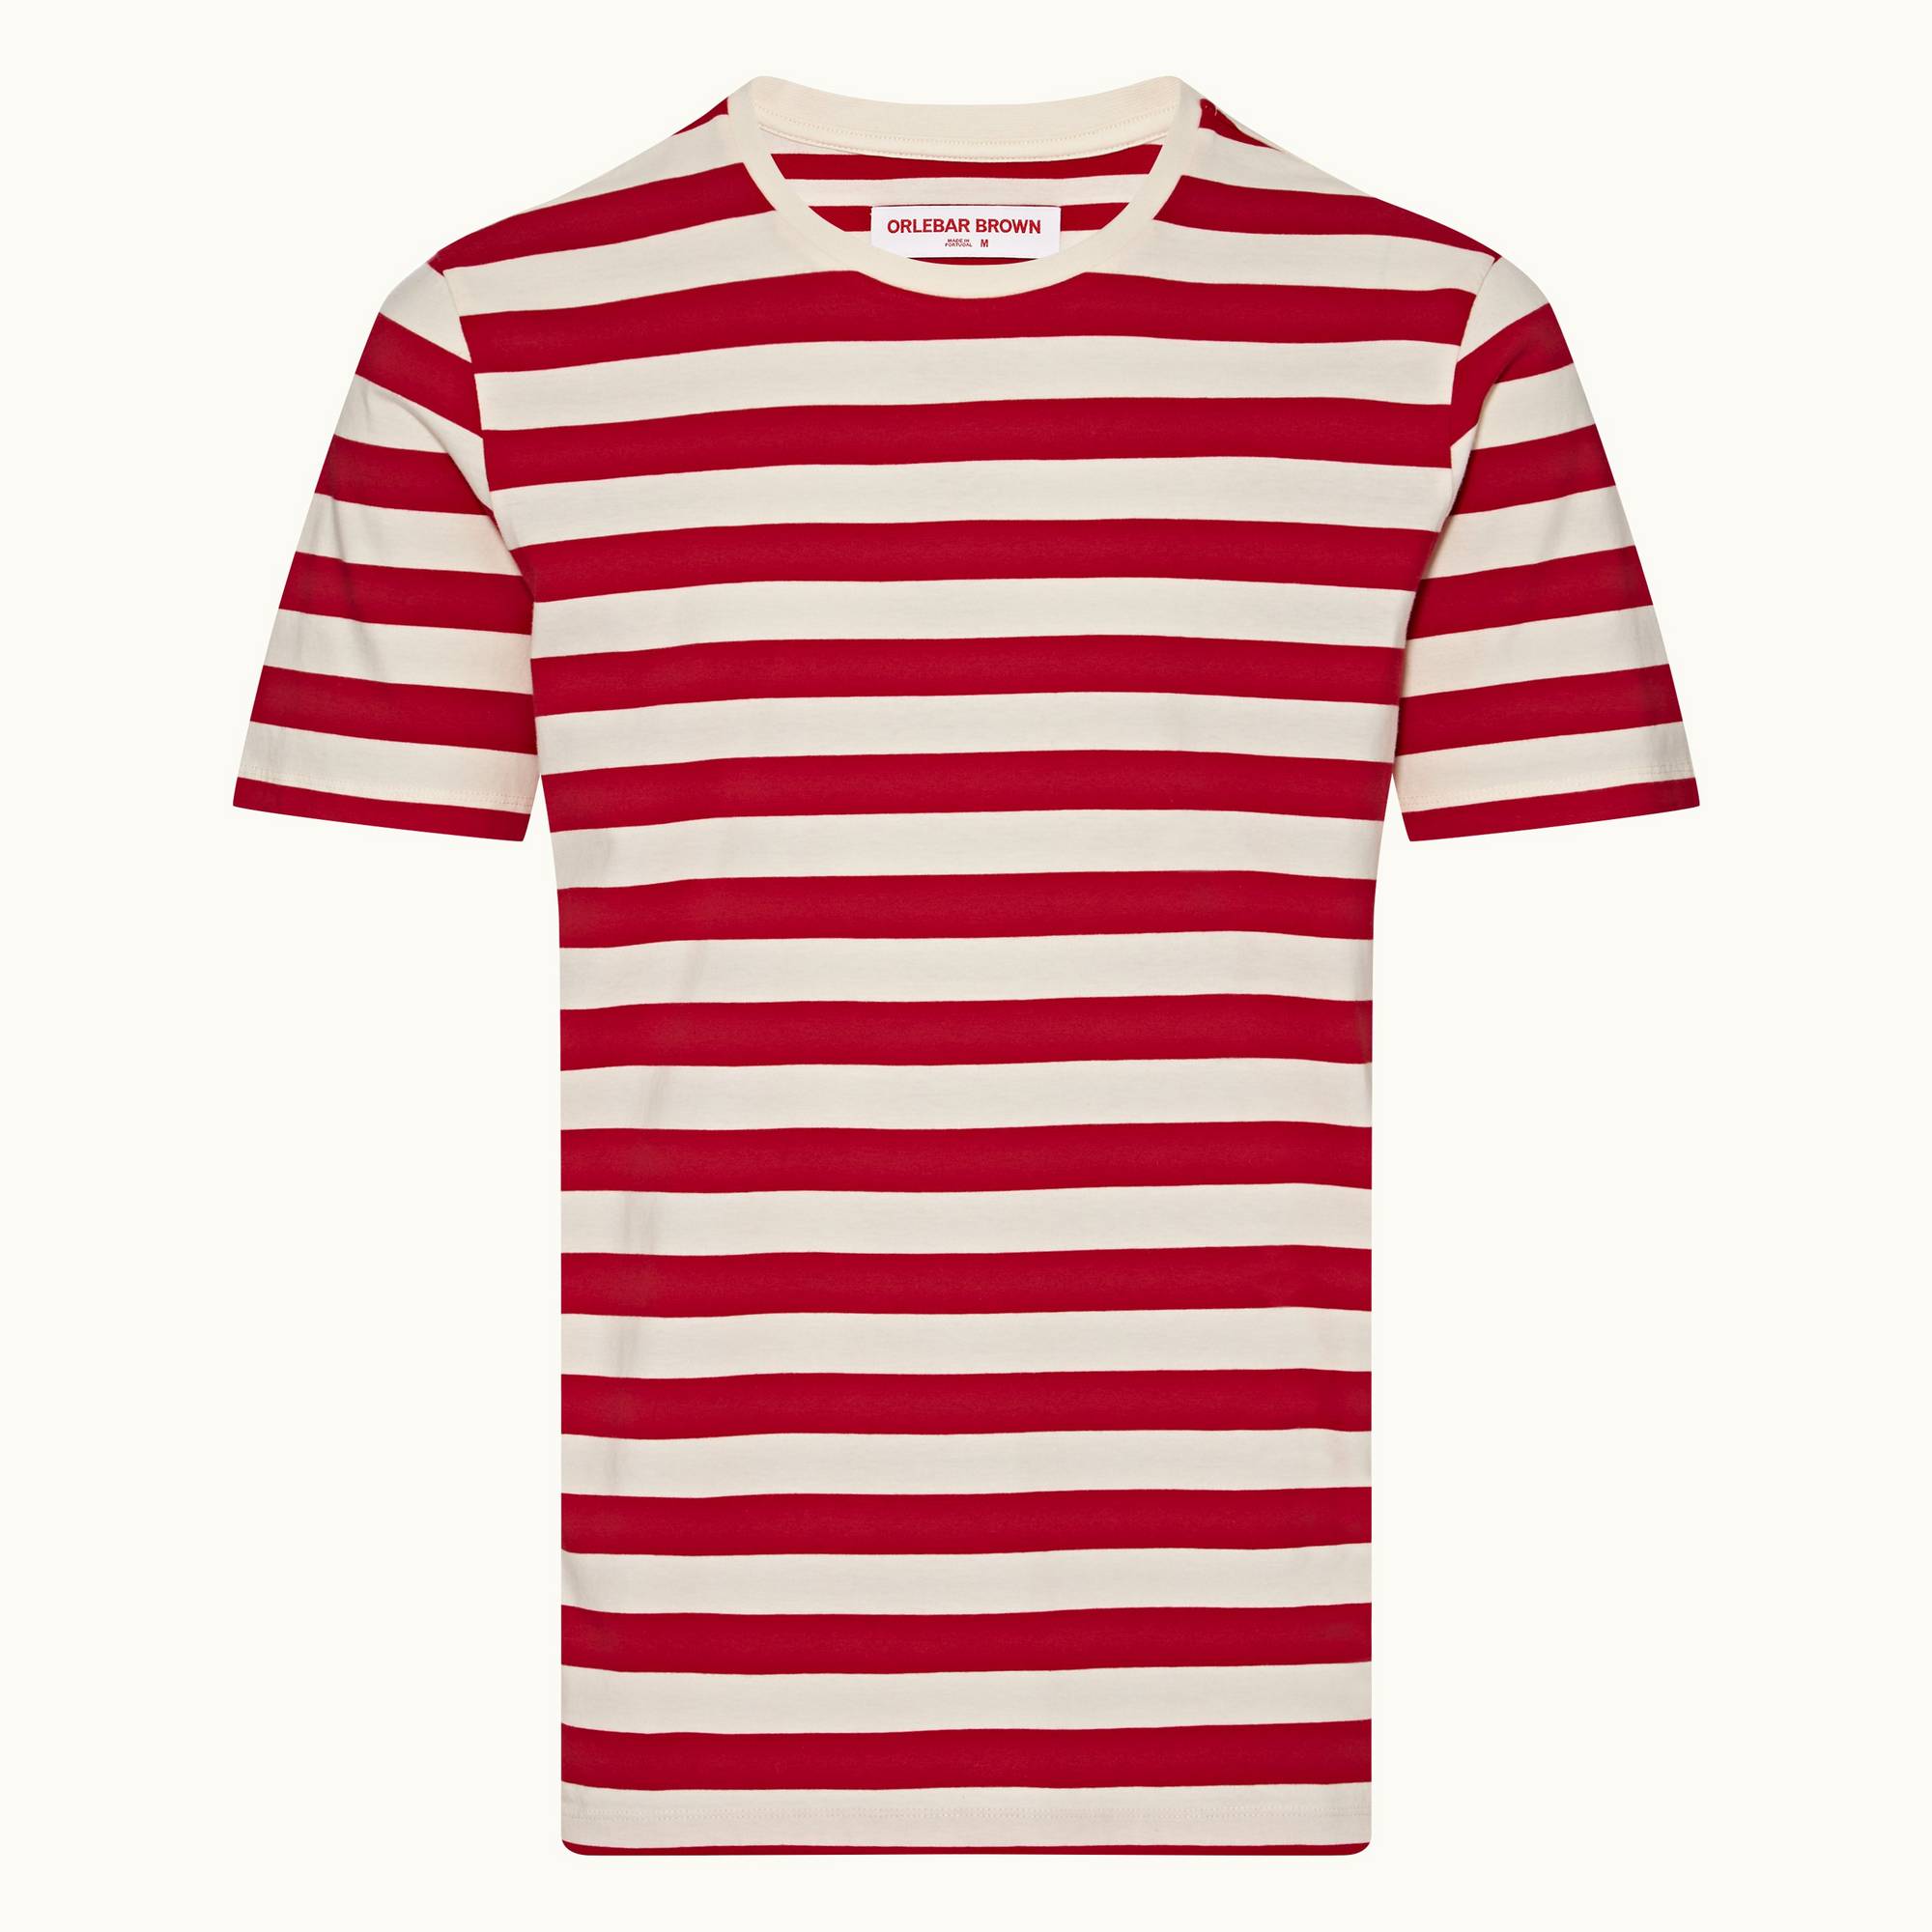 Nicolas Stripe - Mens Vermillion Mix Stripe Relaxed Fit Organic Cotton T-Shirt